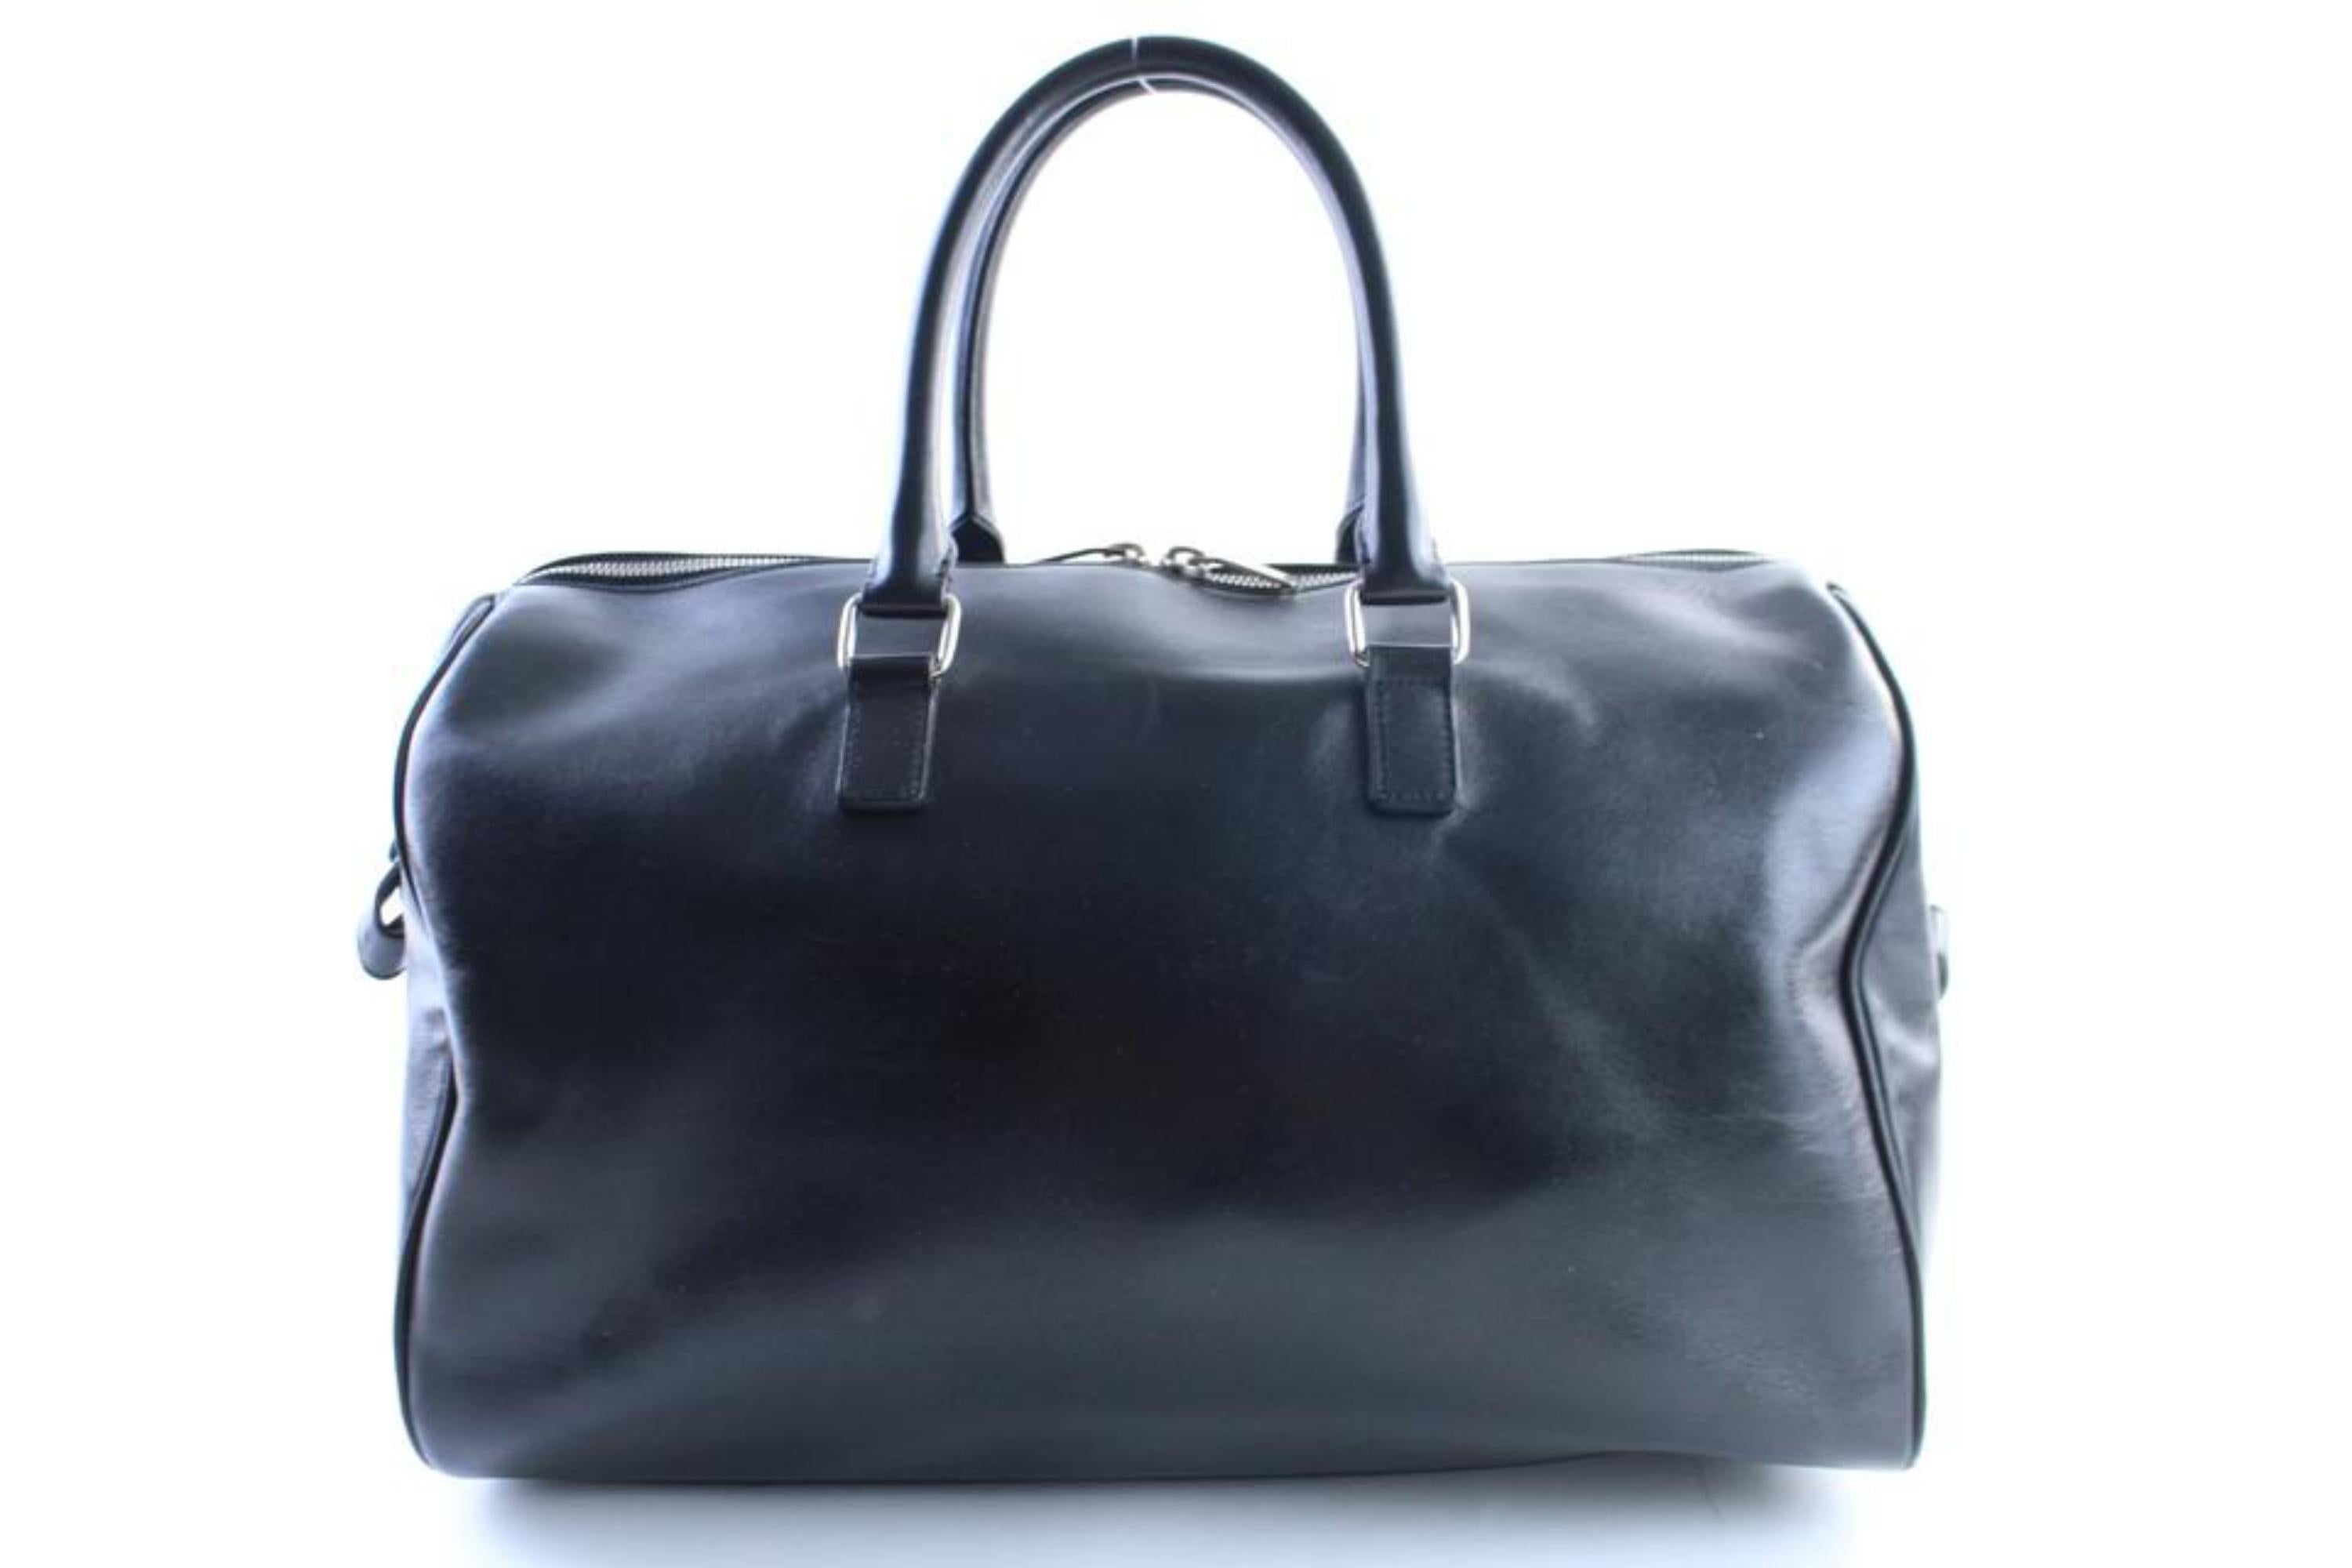 Saint Laurent Duffle Studded 6 Hour 10mr0503 Black Leather Weekend/Travel Bag For Sale 2